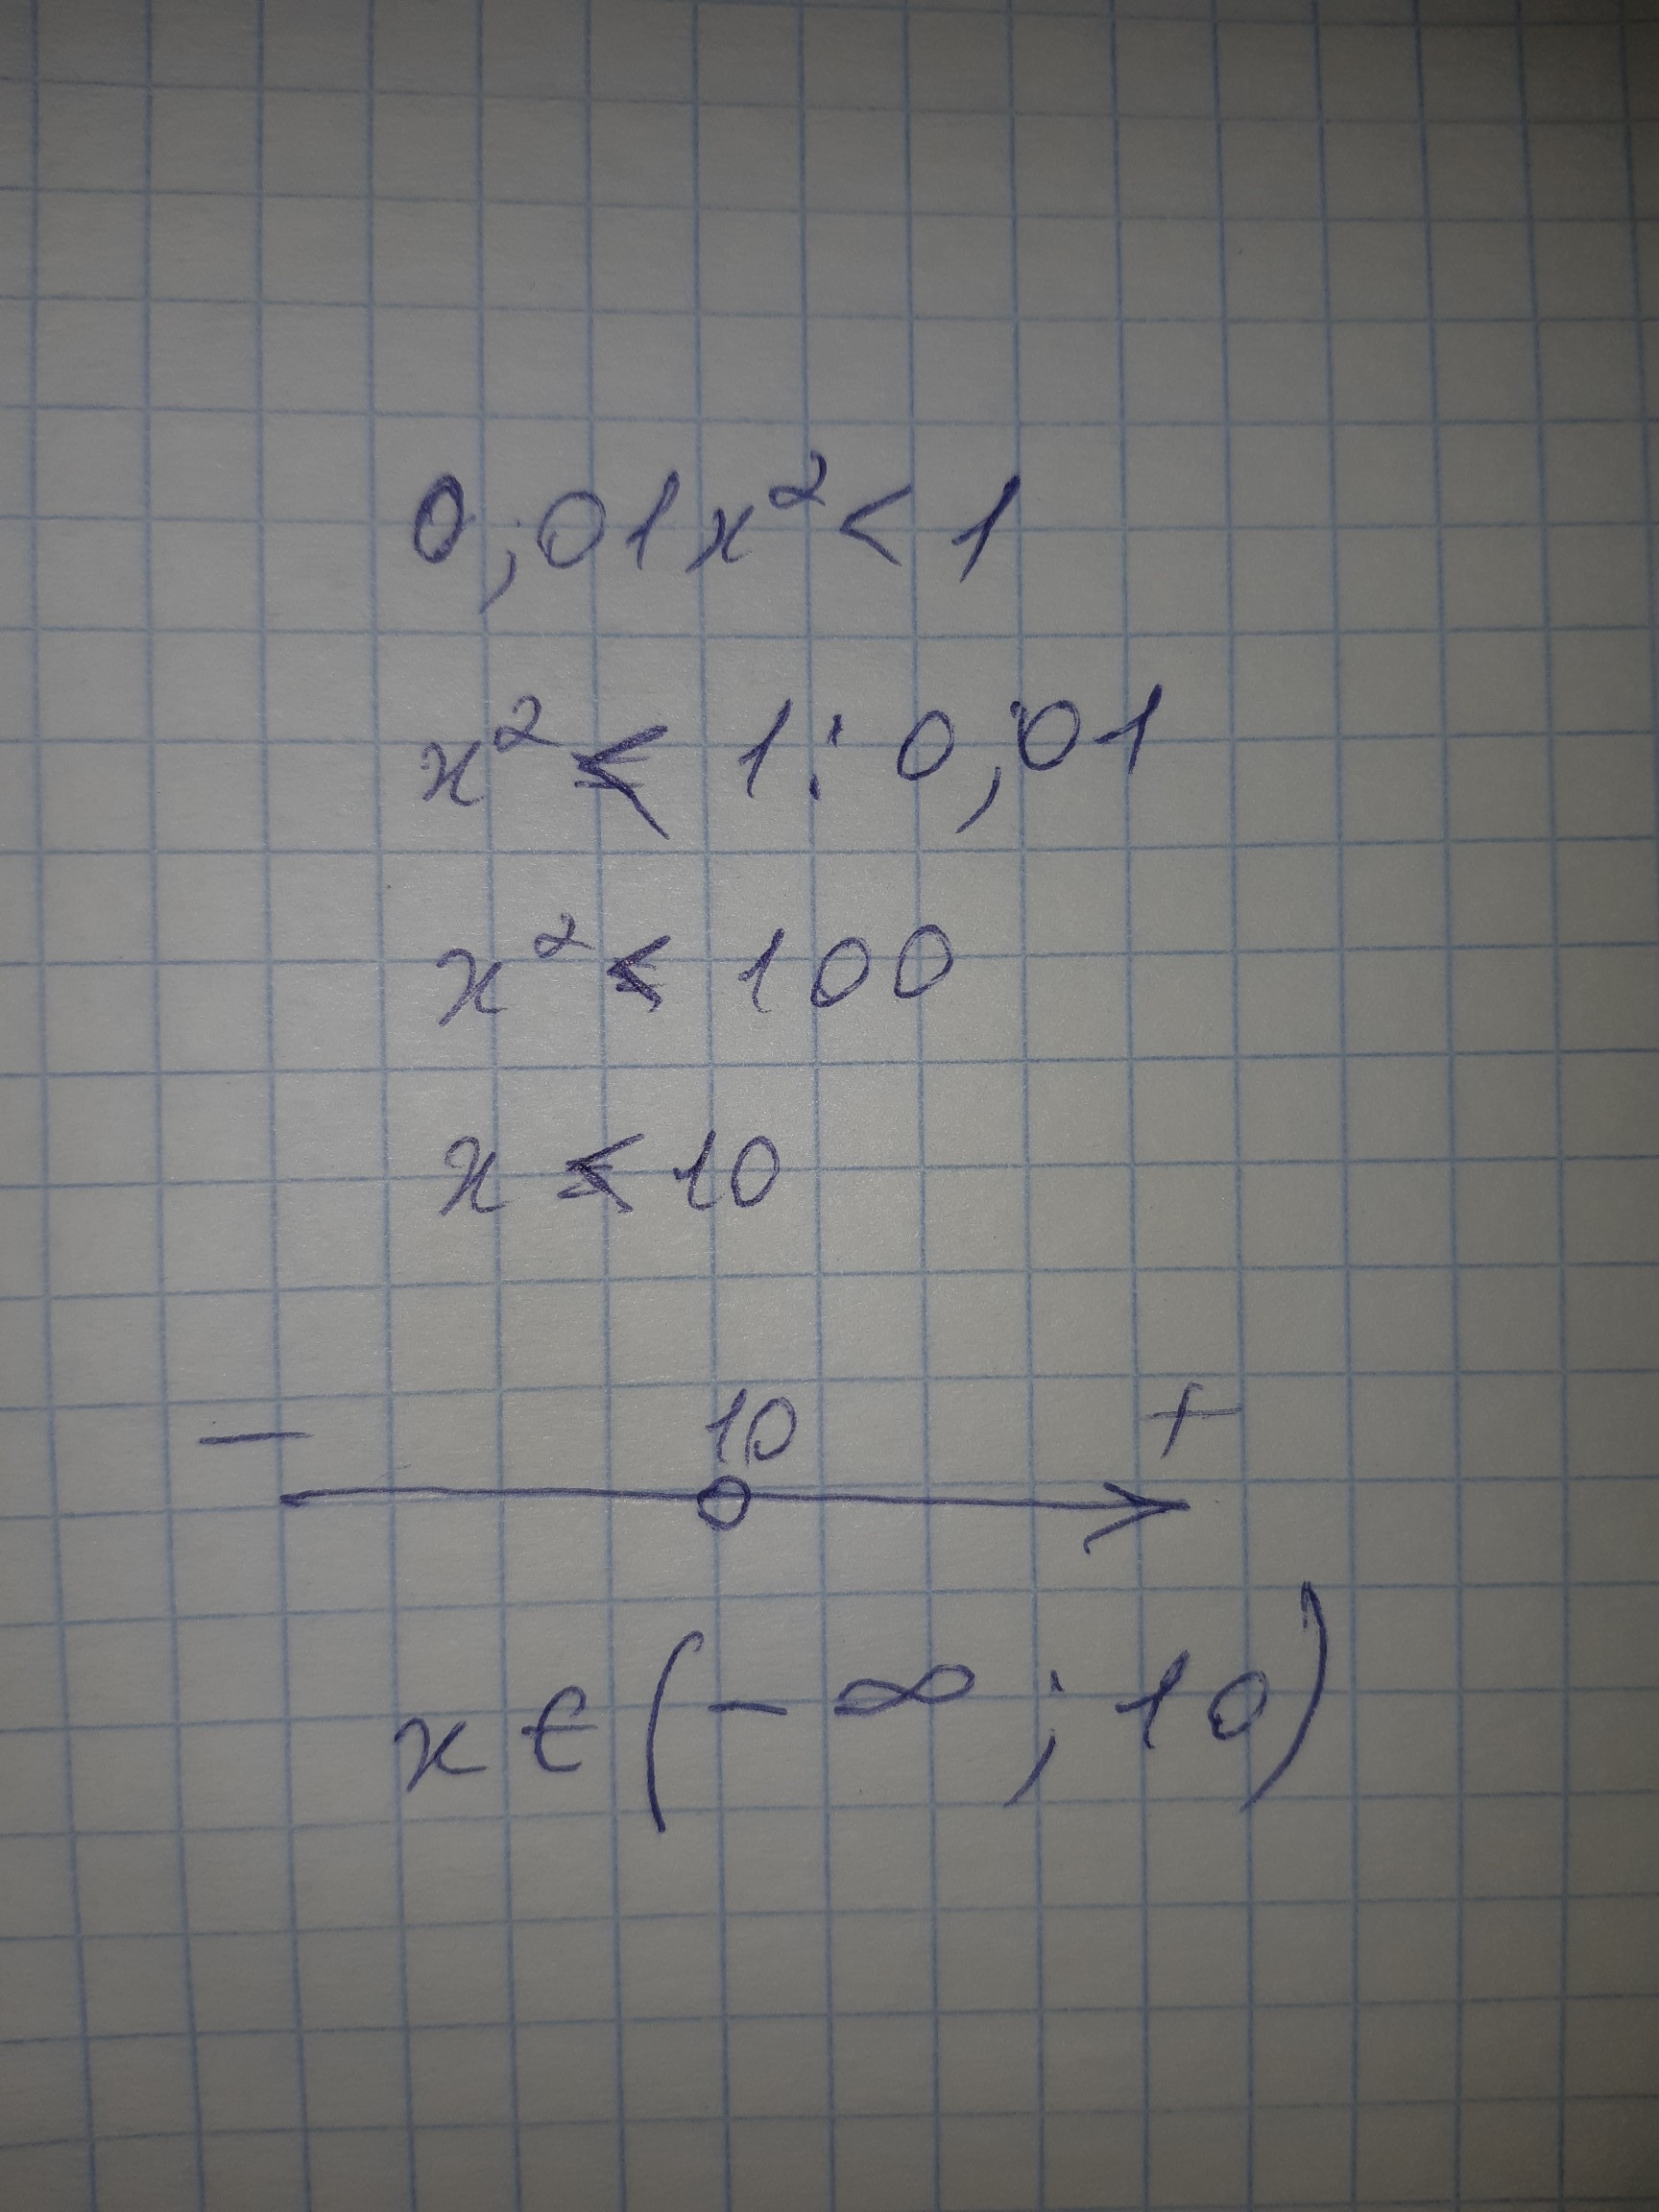 X2 10x 0 неравенство. X^2>529. Х^2>529. Х²+х-30<0 неравенство.